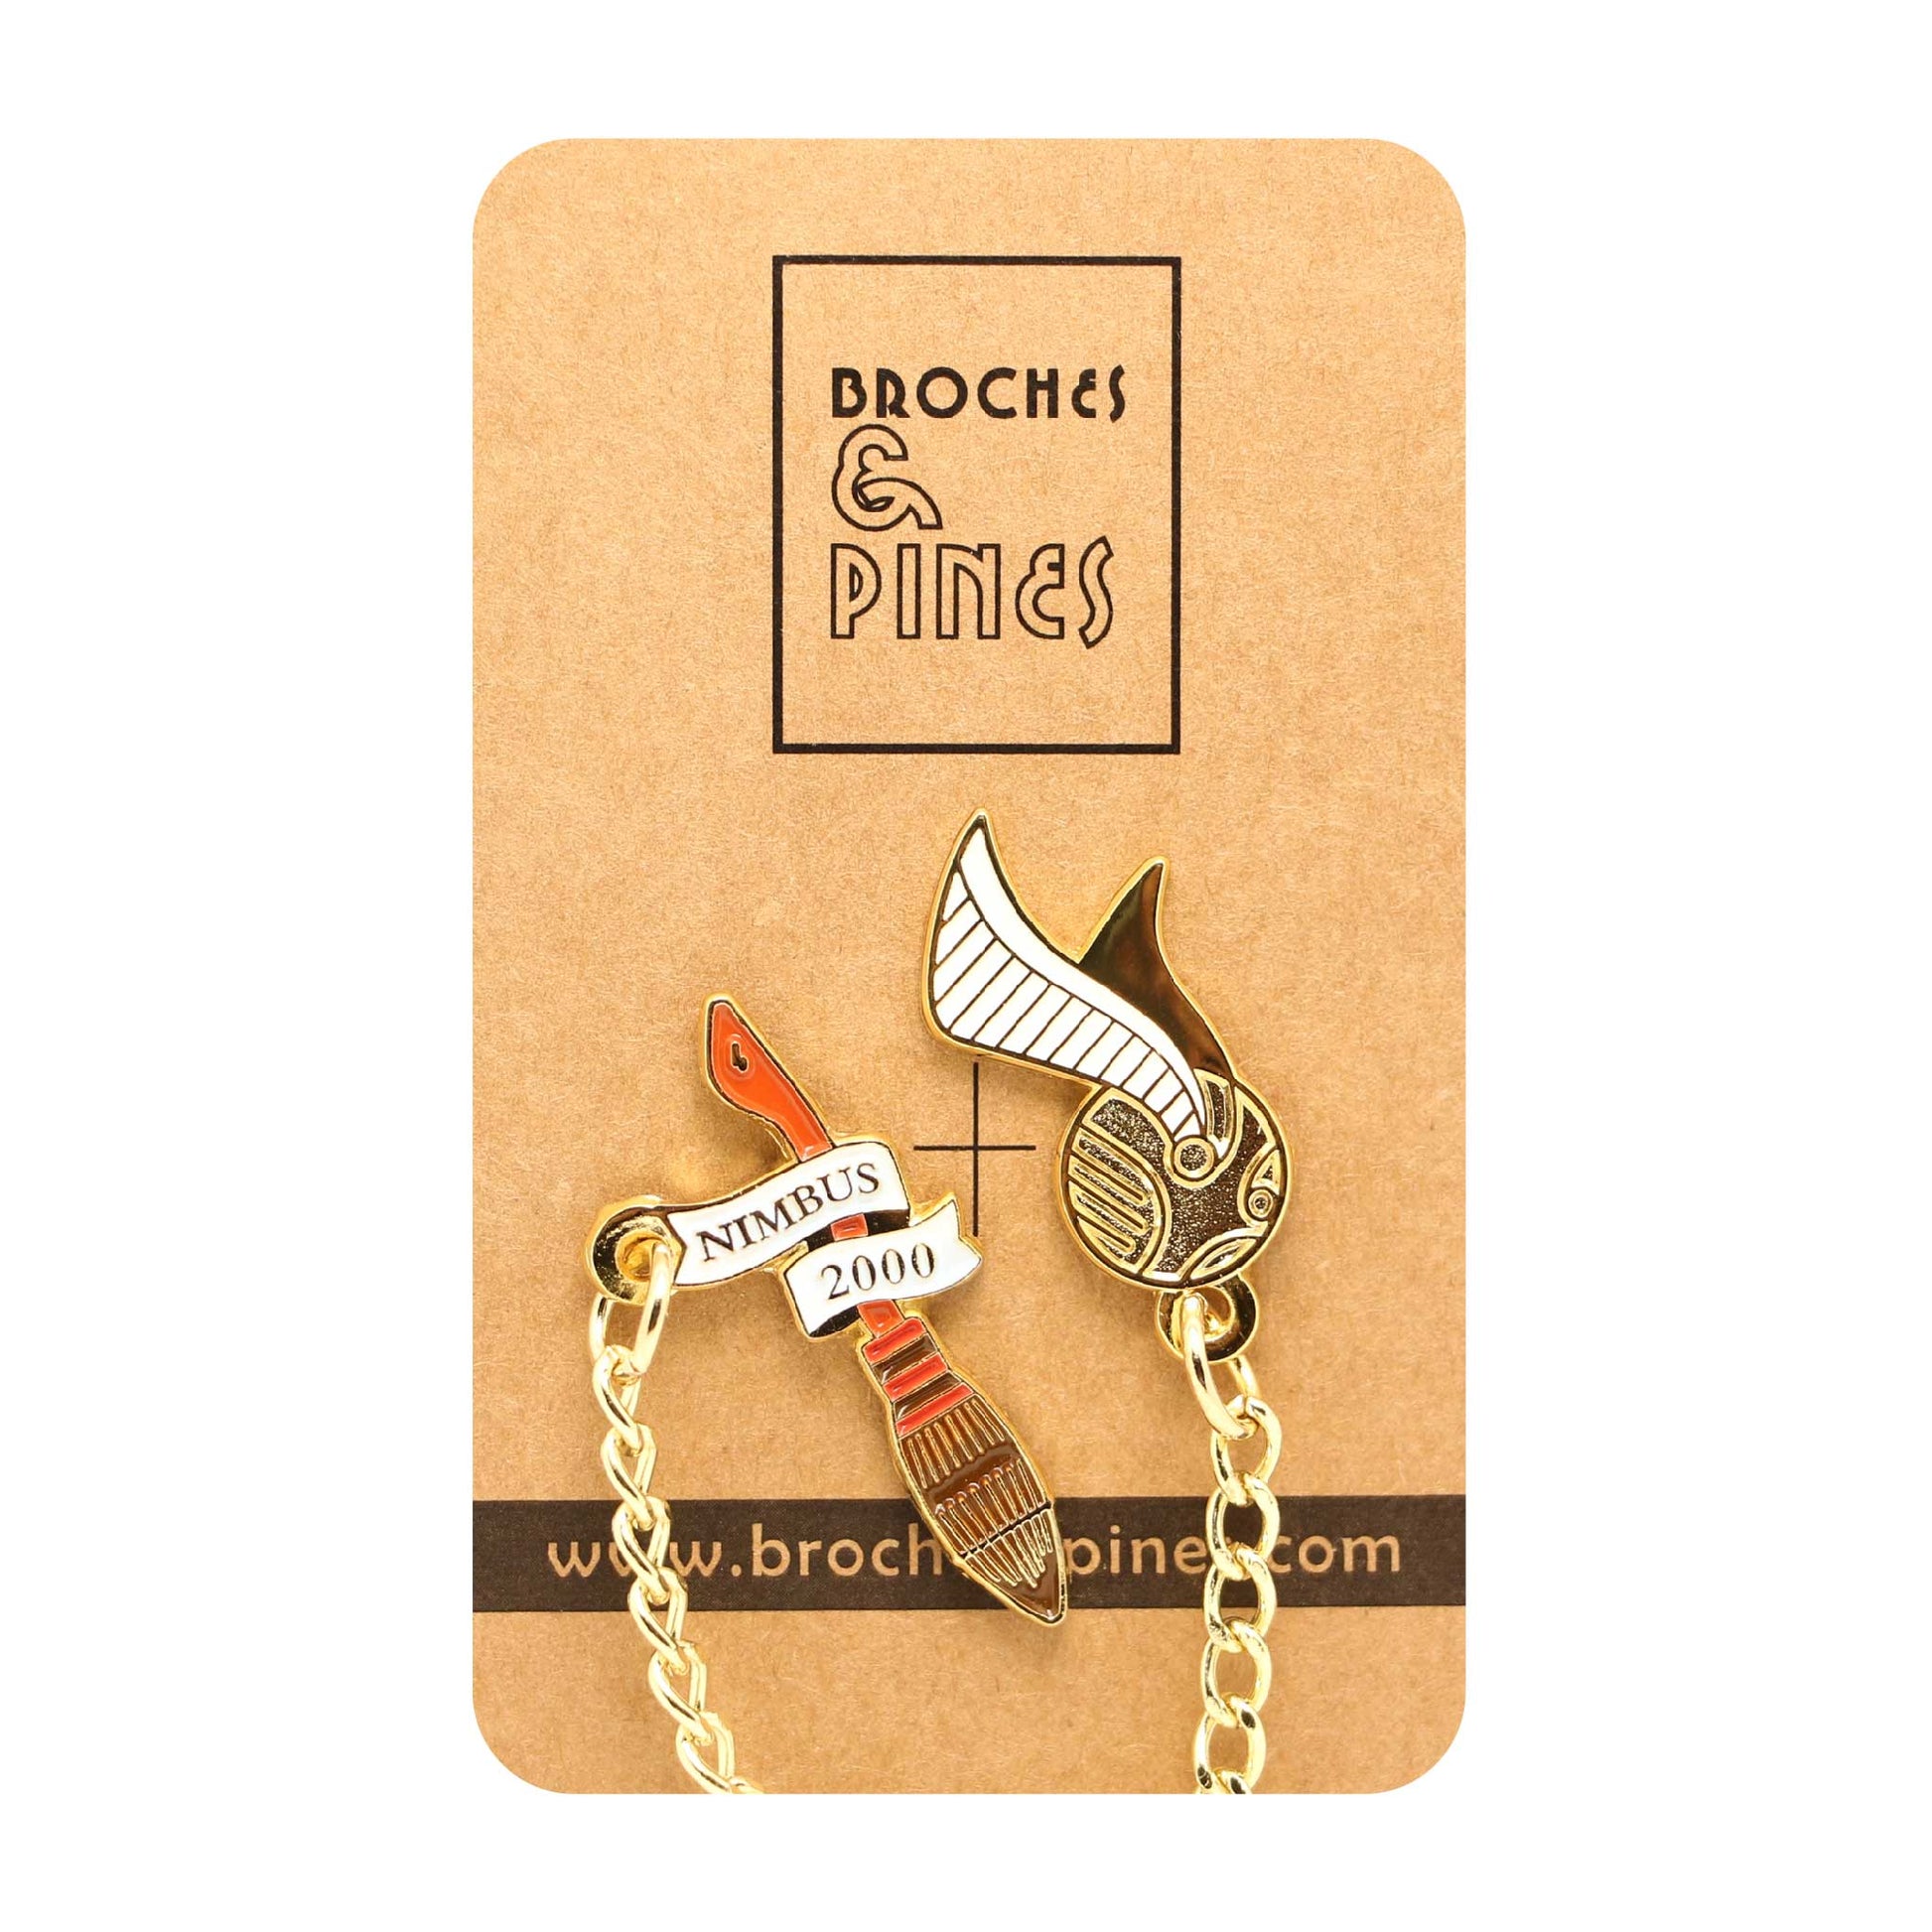 Pin Snitch Dorada - Harry Potter